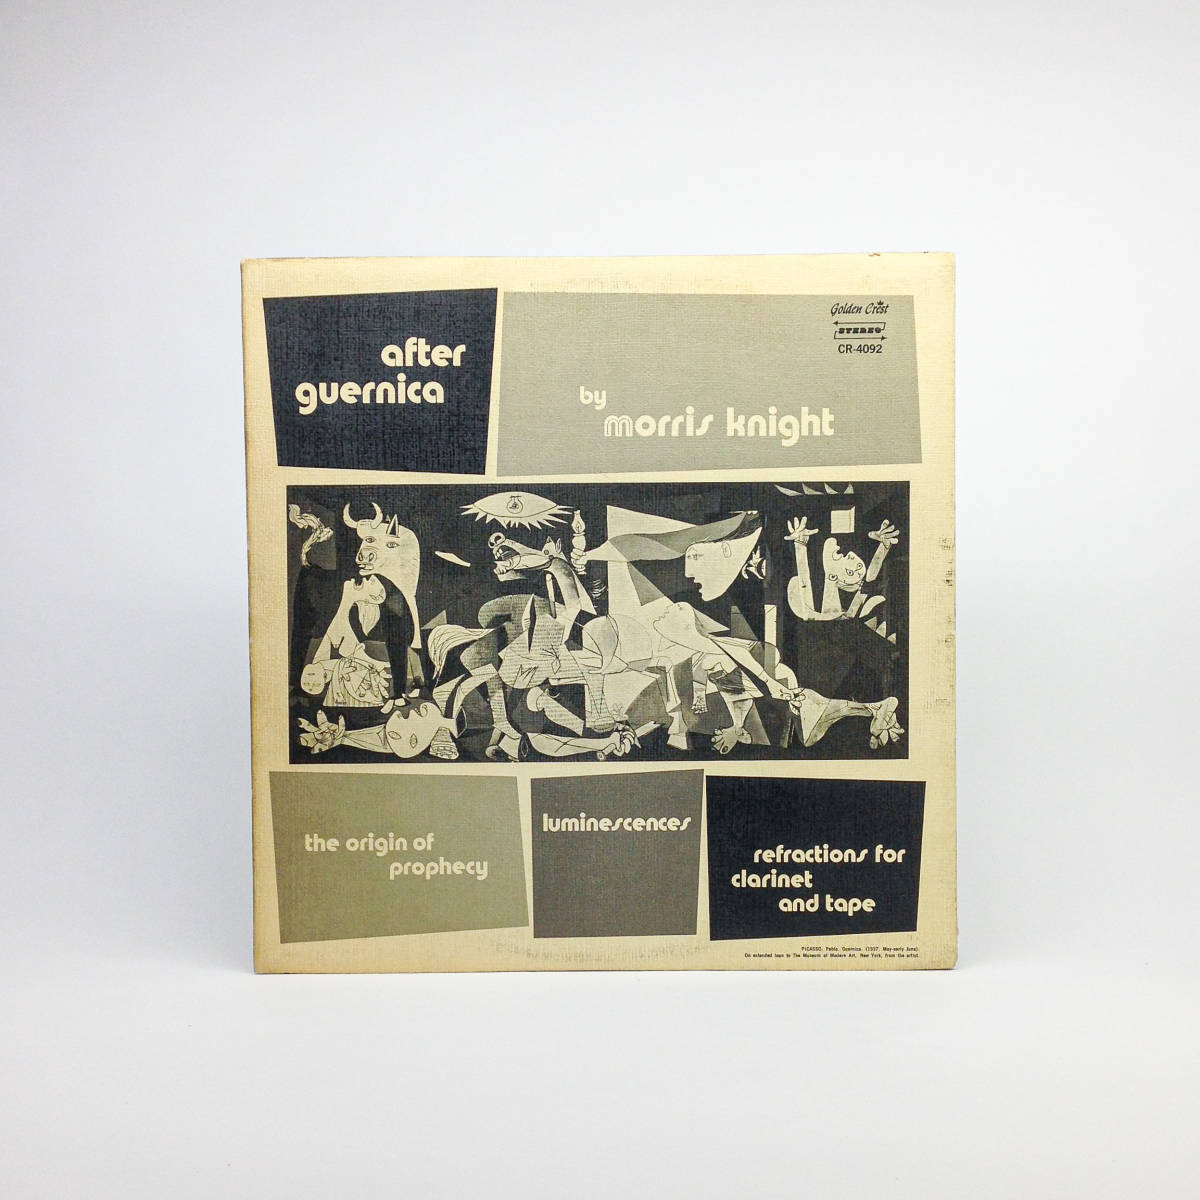 [LP] \'69 рис Orig / Morris Knight / After Guernica / Golden Crest / CR-4092 / Experimental